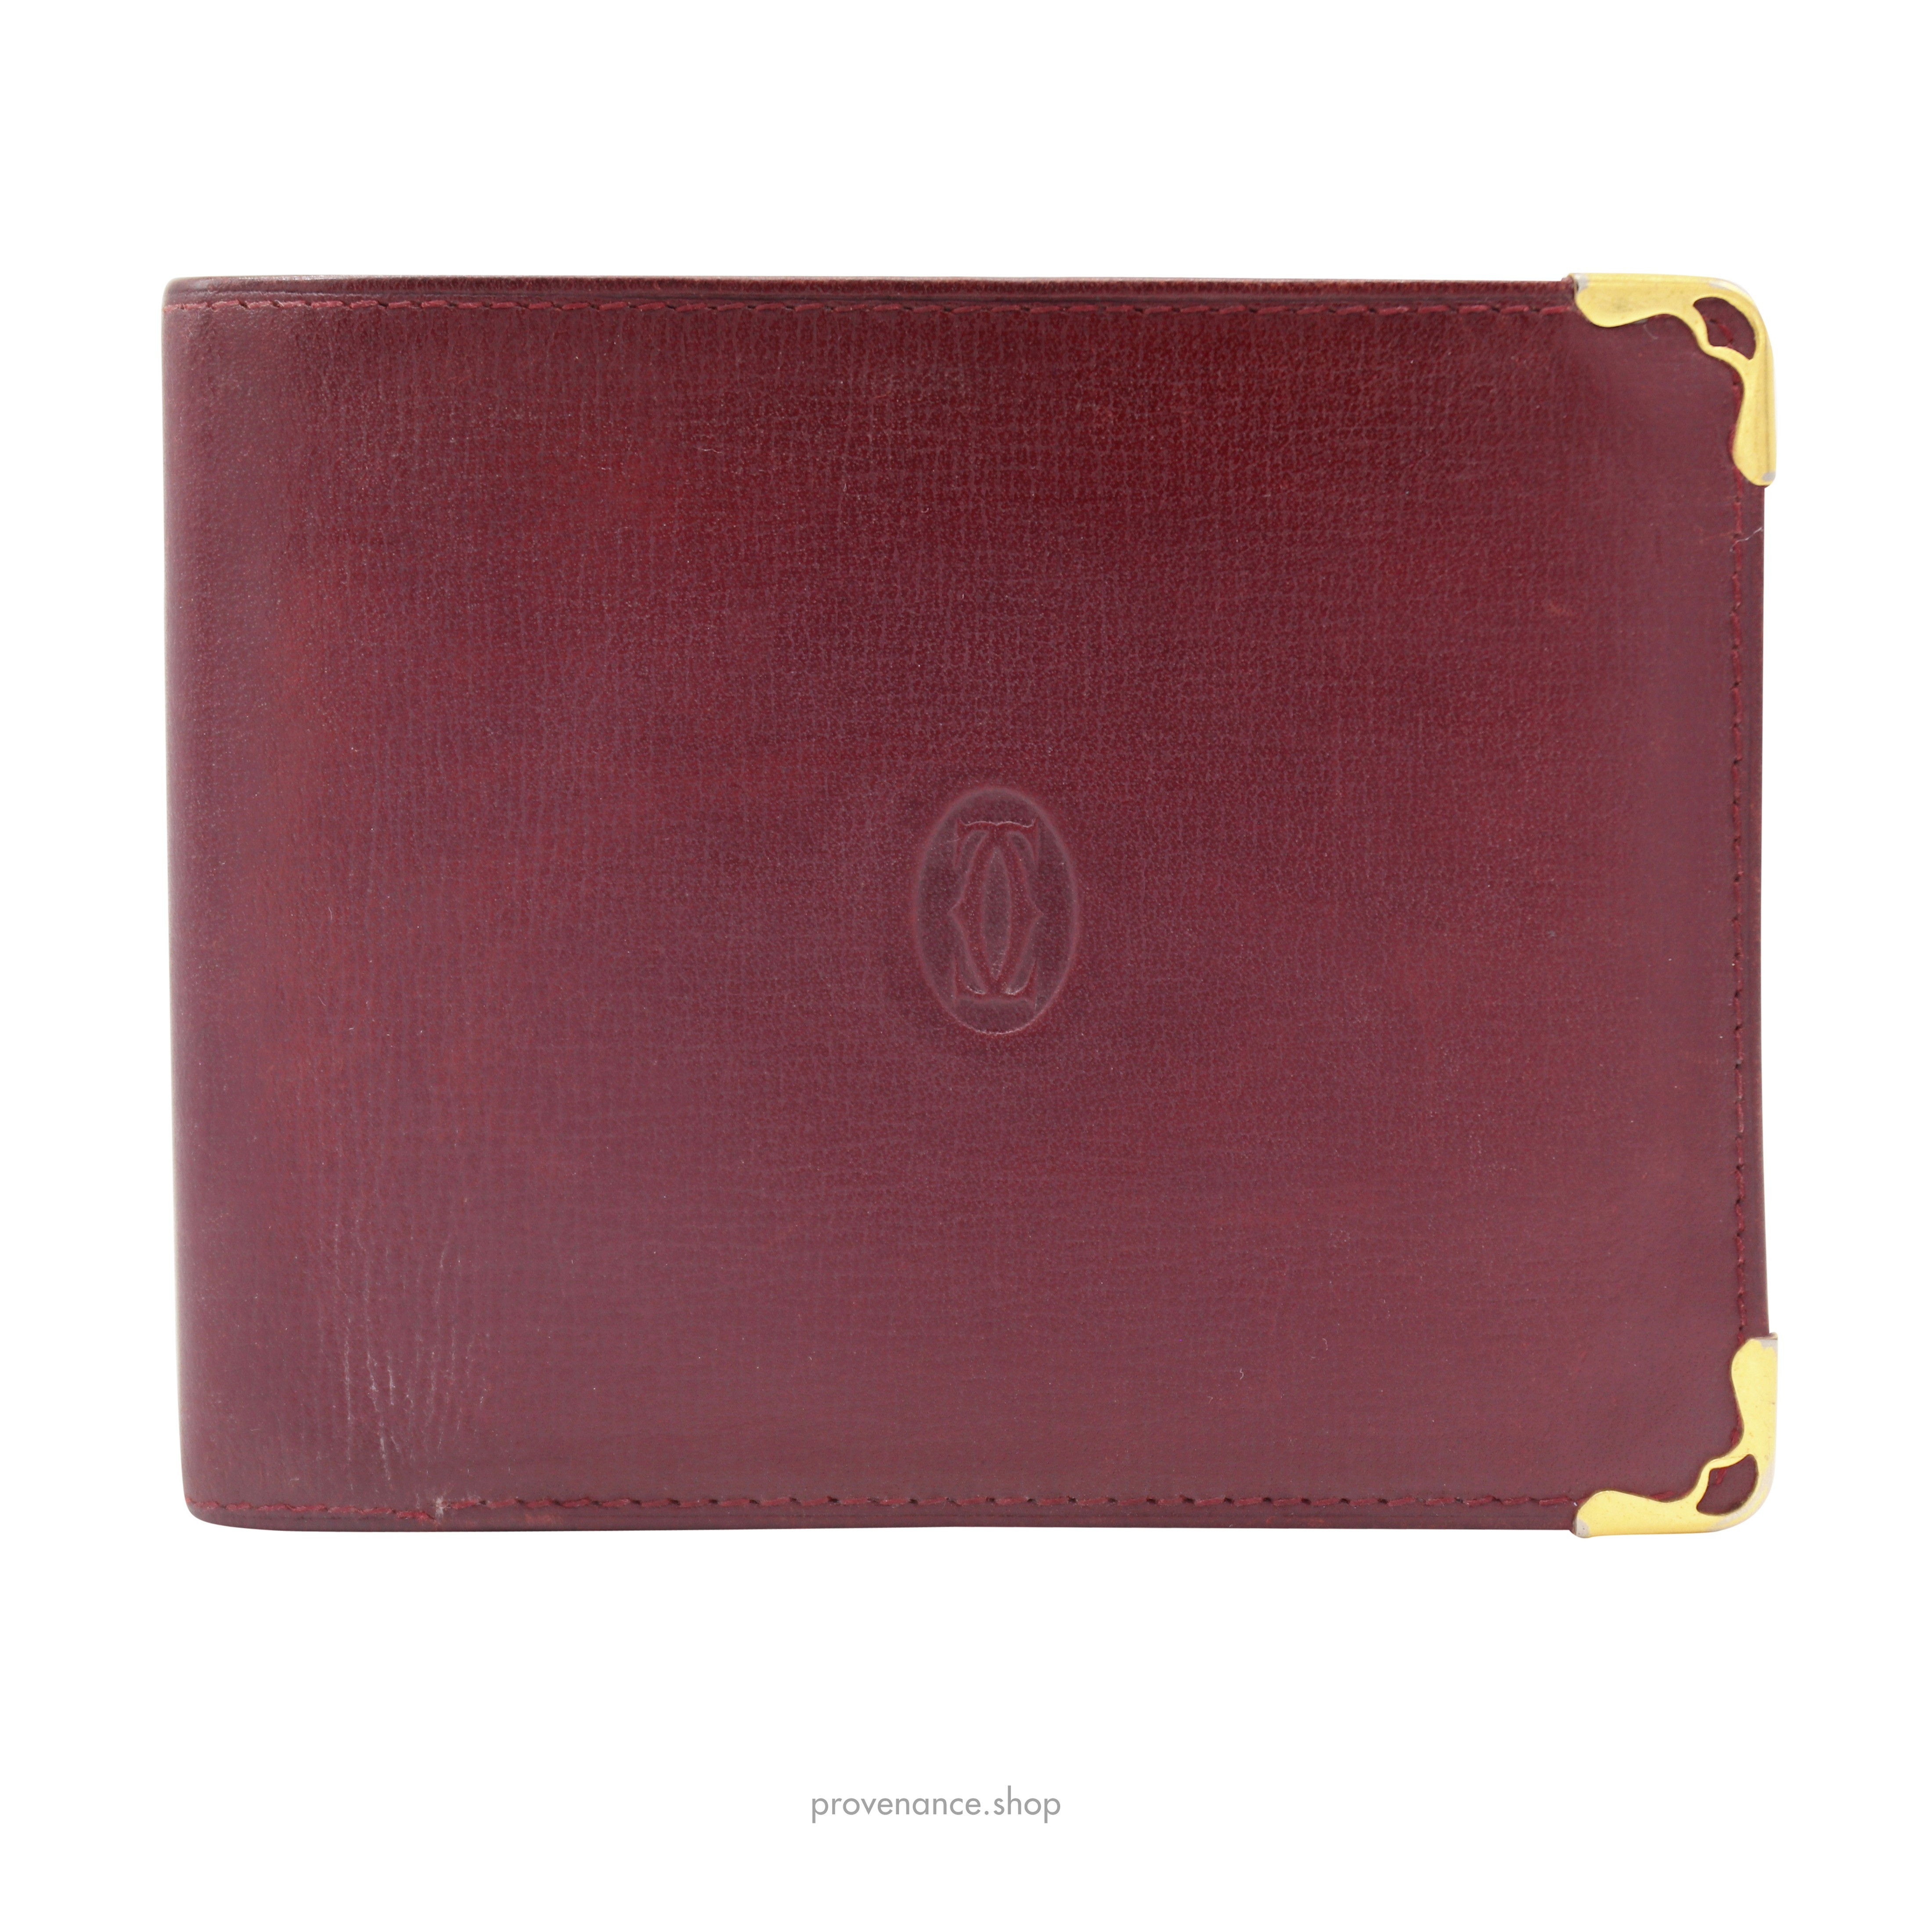 6CC Bifold Wallet - Burgundy Calfskin Leather - 1